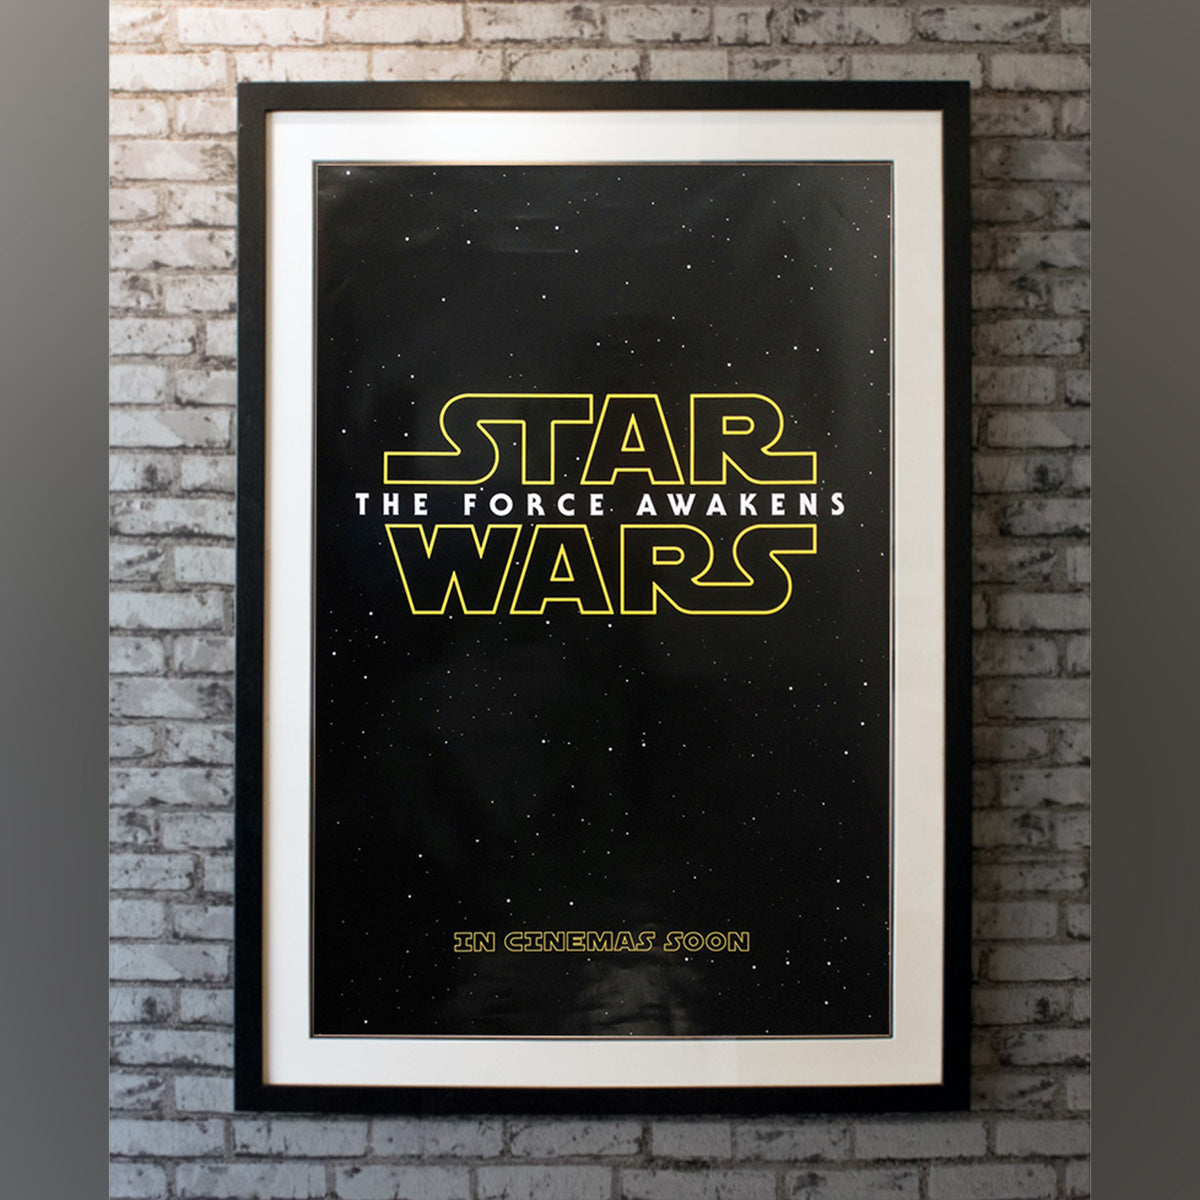 Original Movie Poster of Star Wars: The Force Awakens (2015)